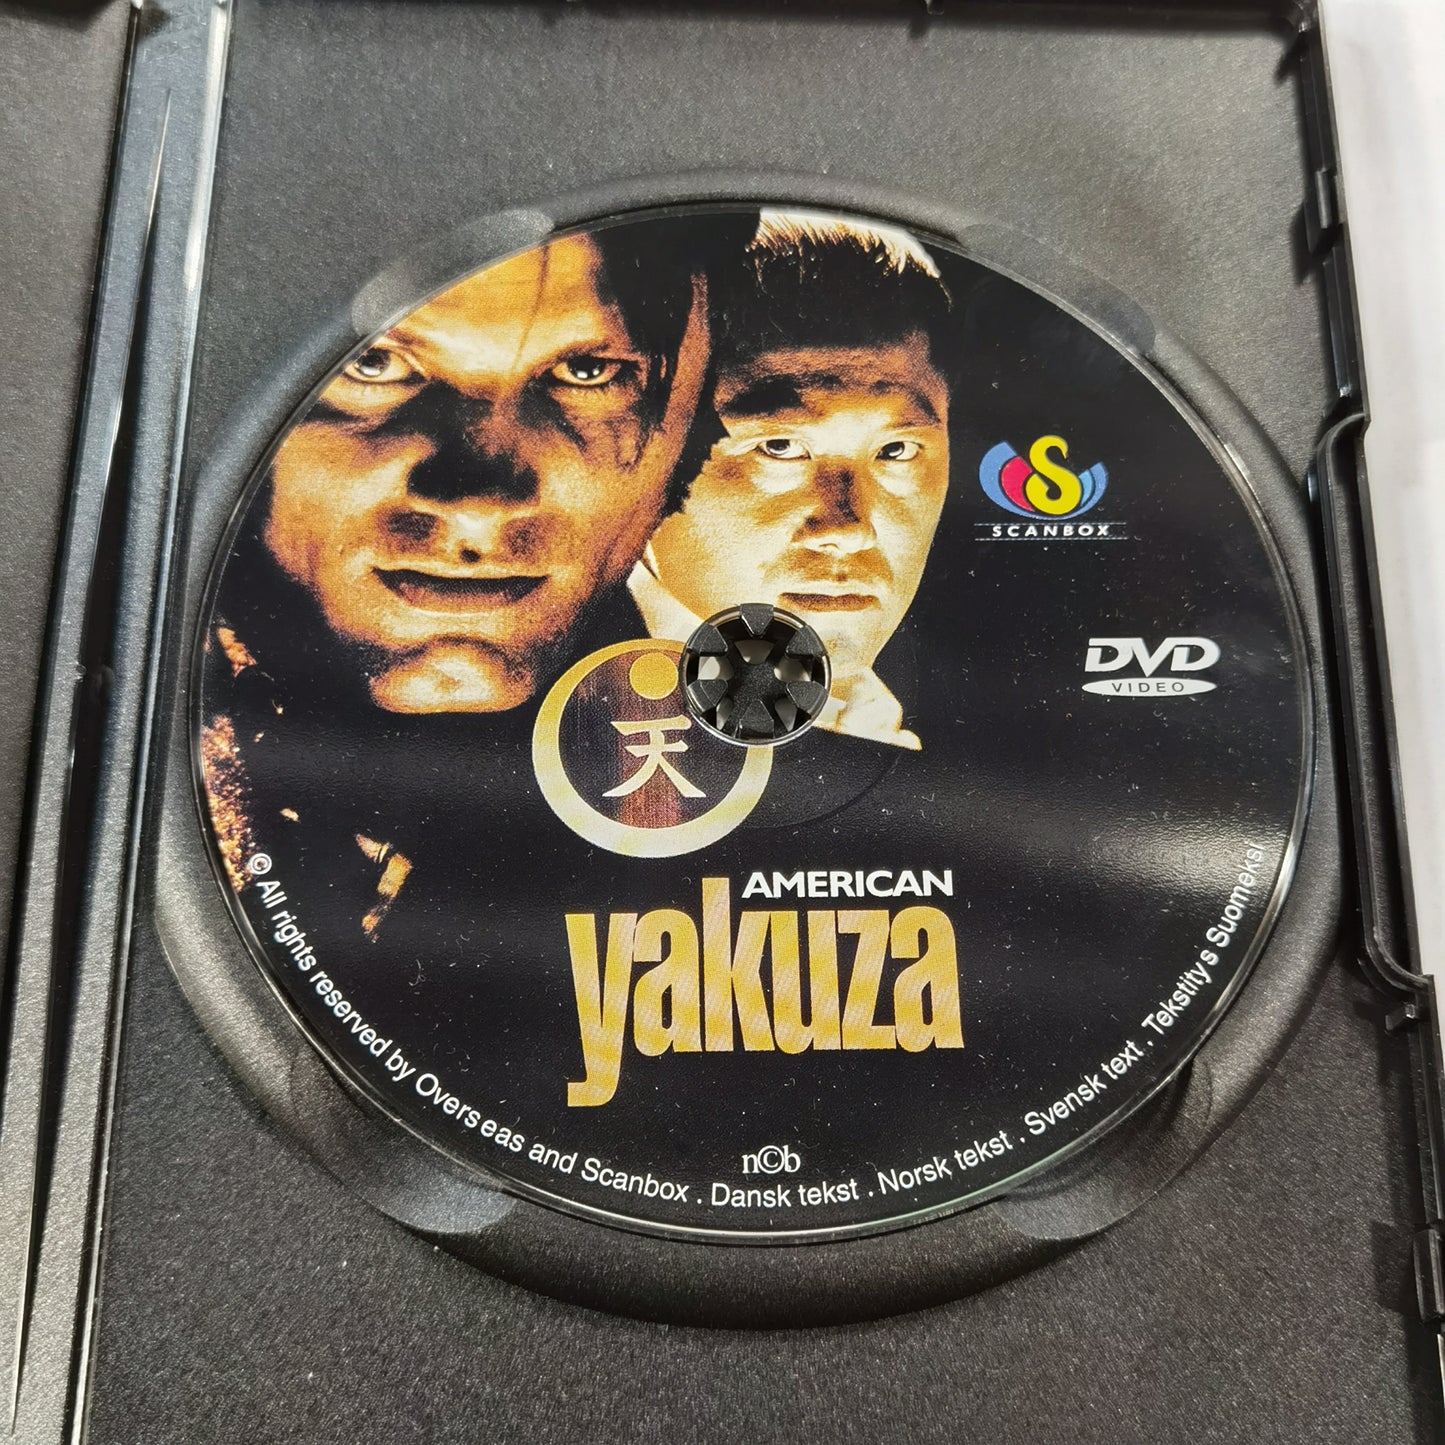 American Yakuza (1993) - DVD SE